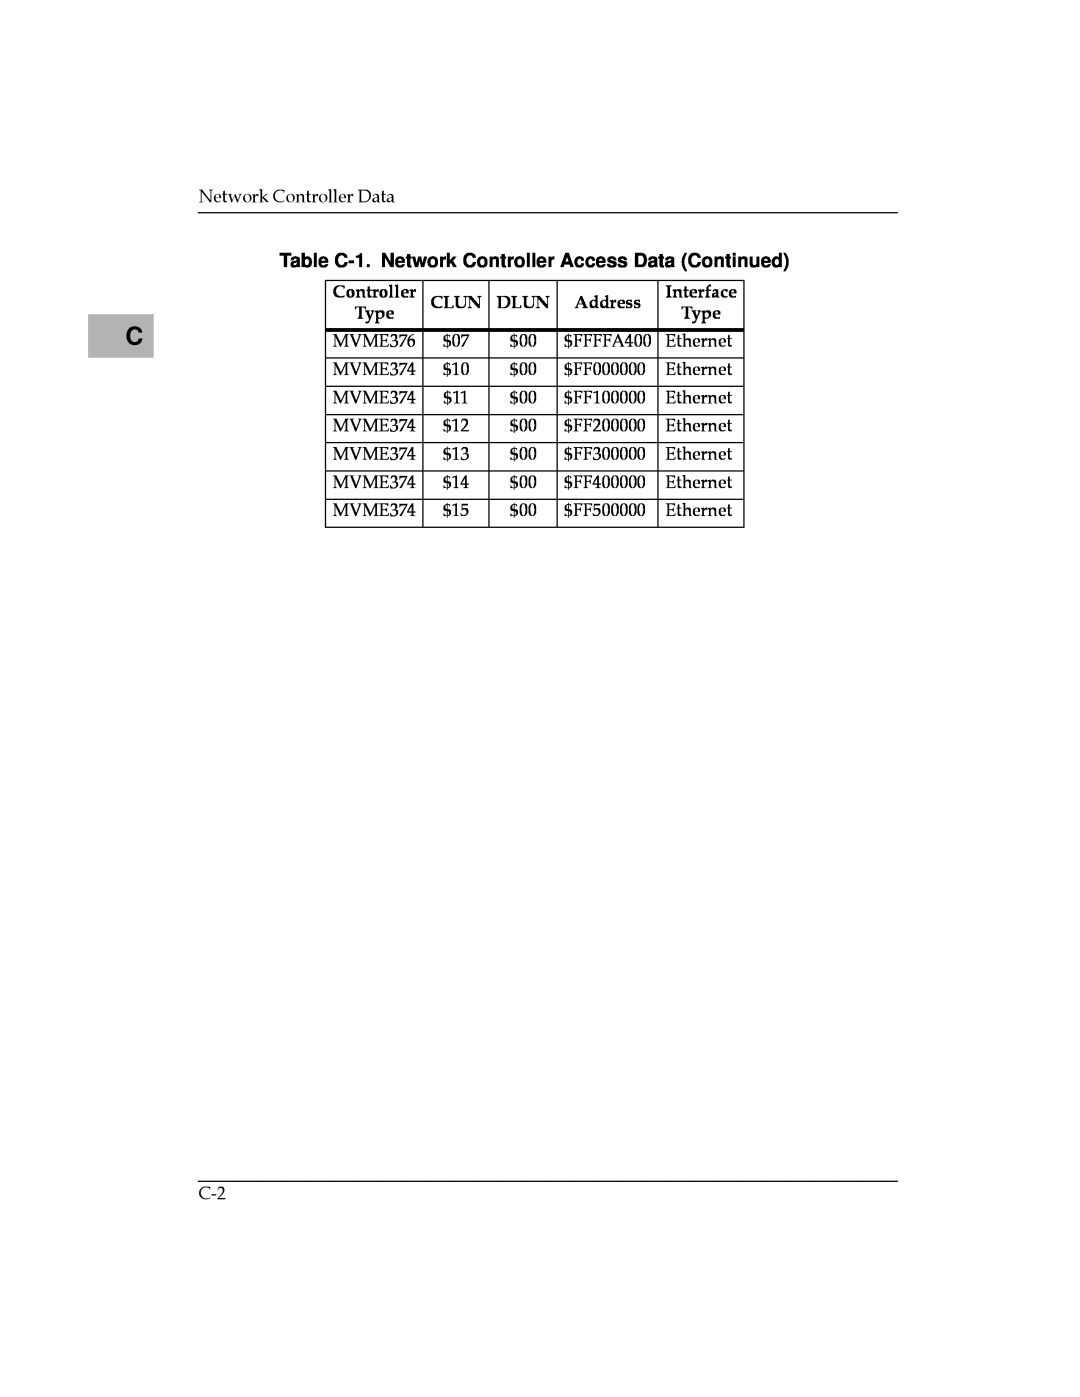 Motorola MVME187 manual Table C-1. Network Controller Access Data Continued 